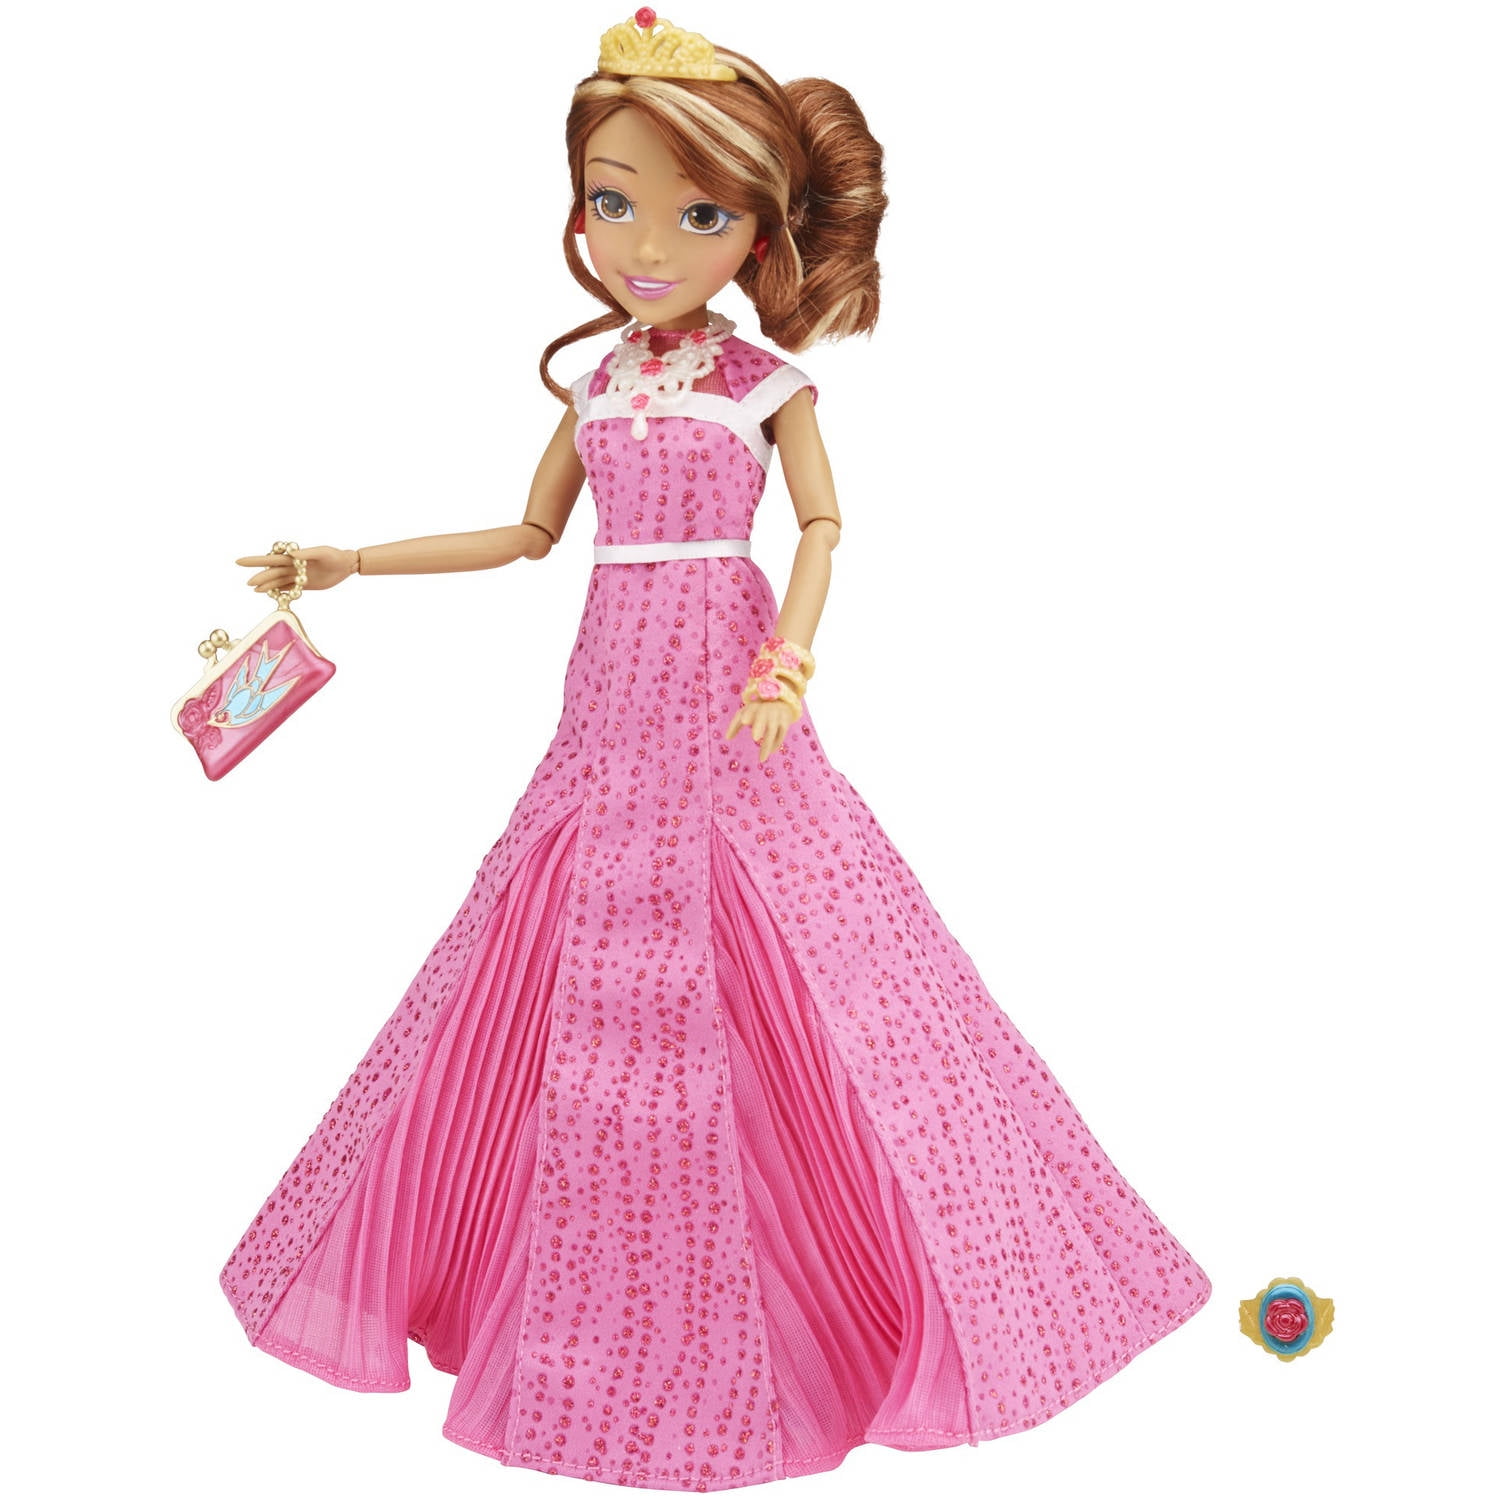 Disney Descendants Coronation Audrey Auradon Prep Doll Toy w Ring for U Hasbro